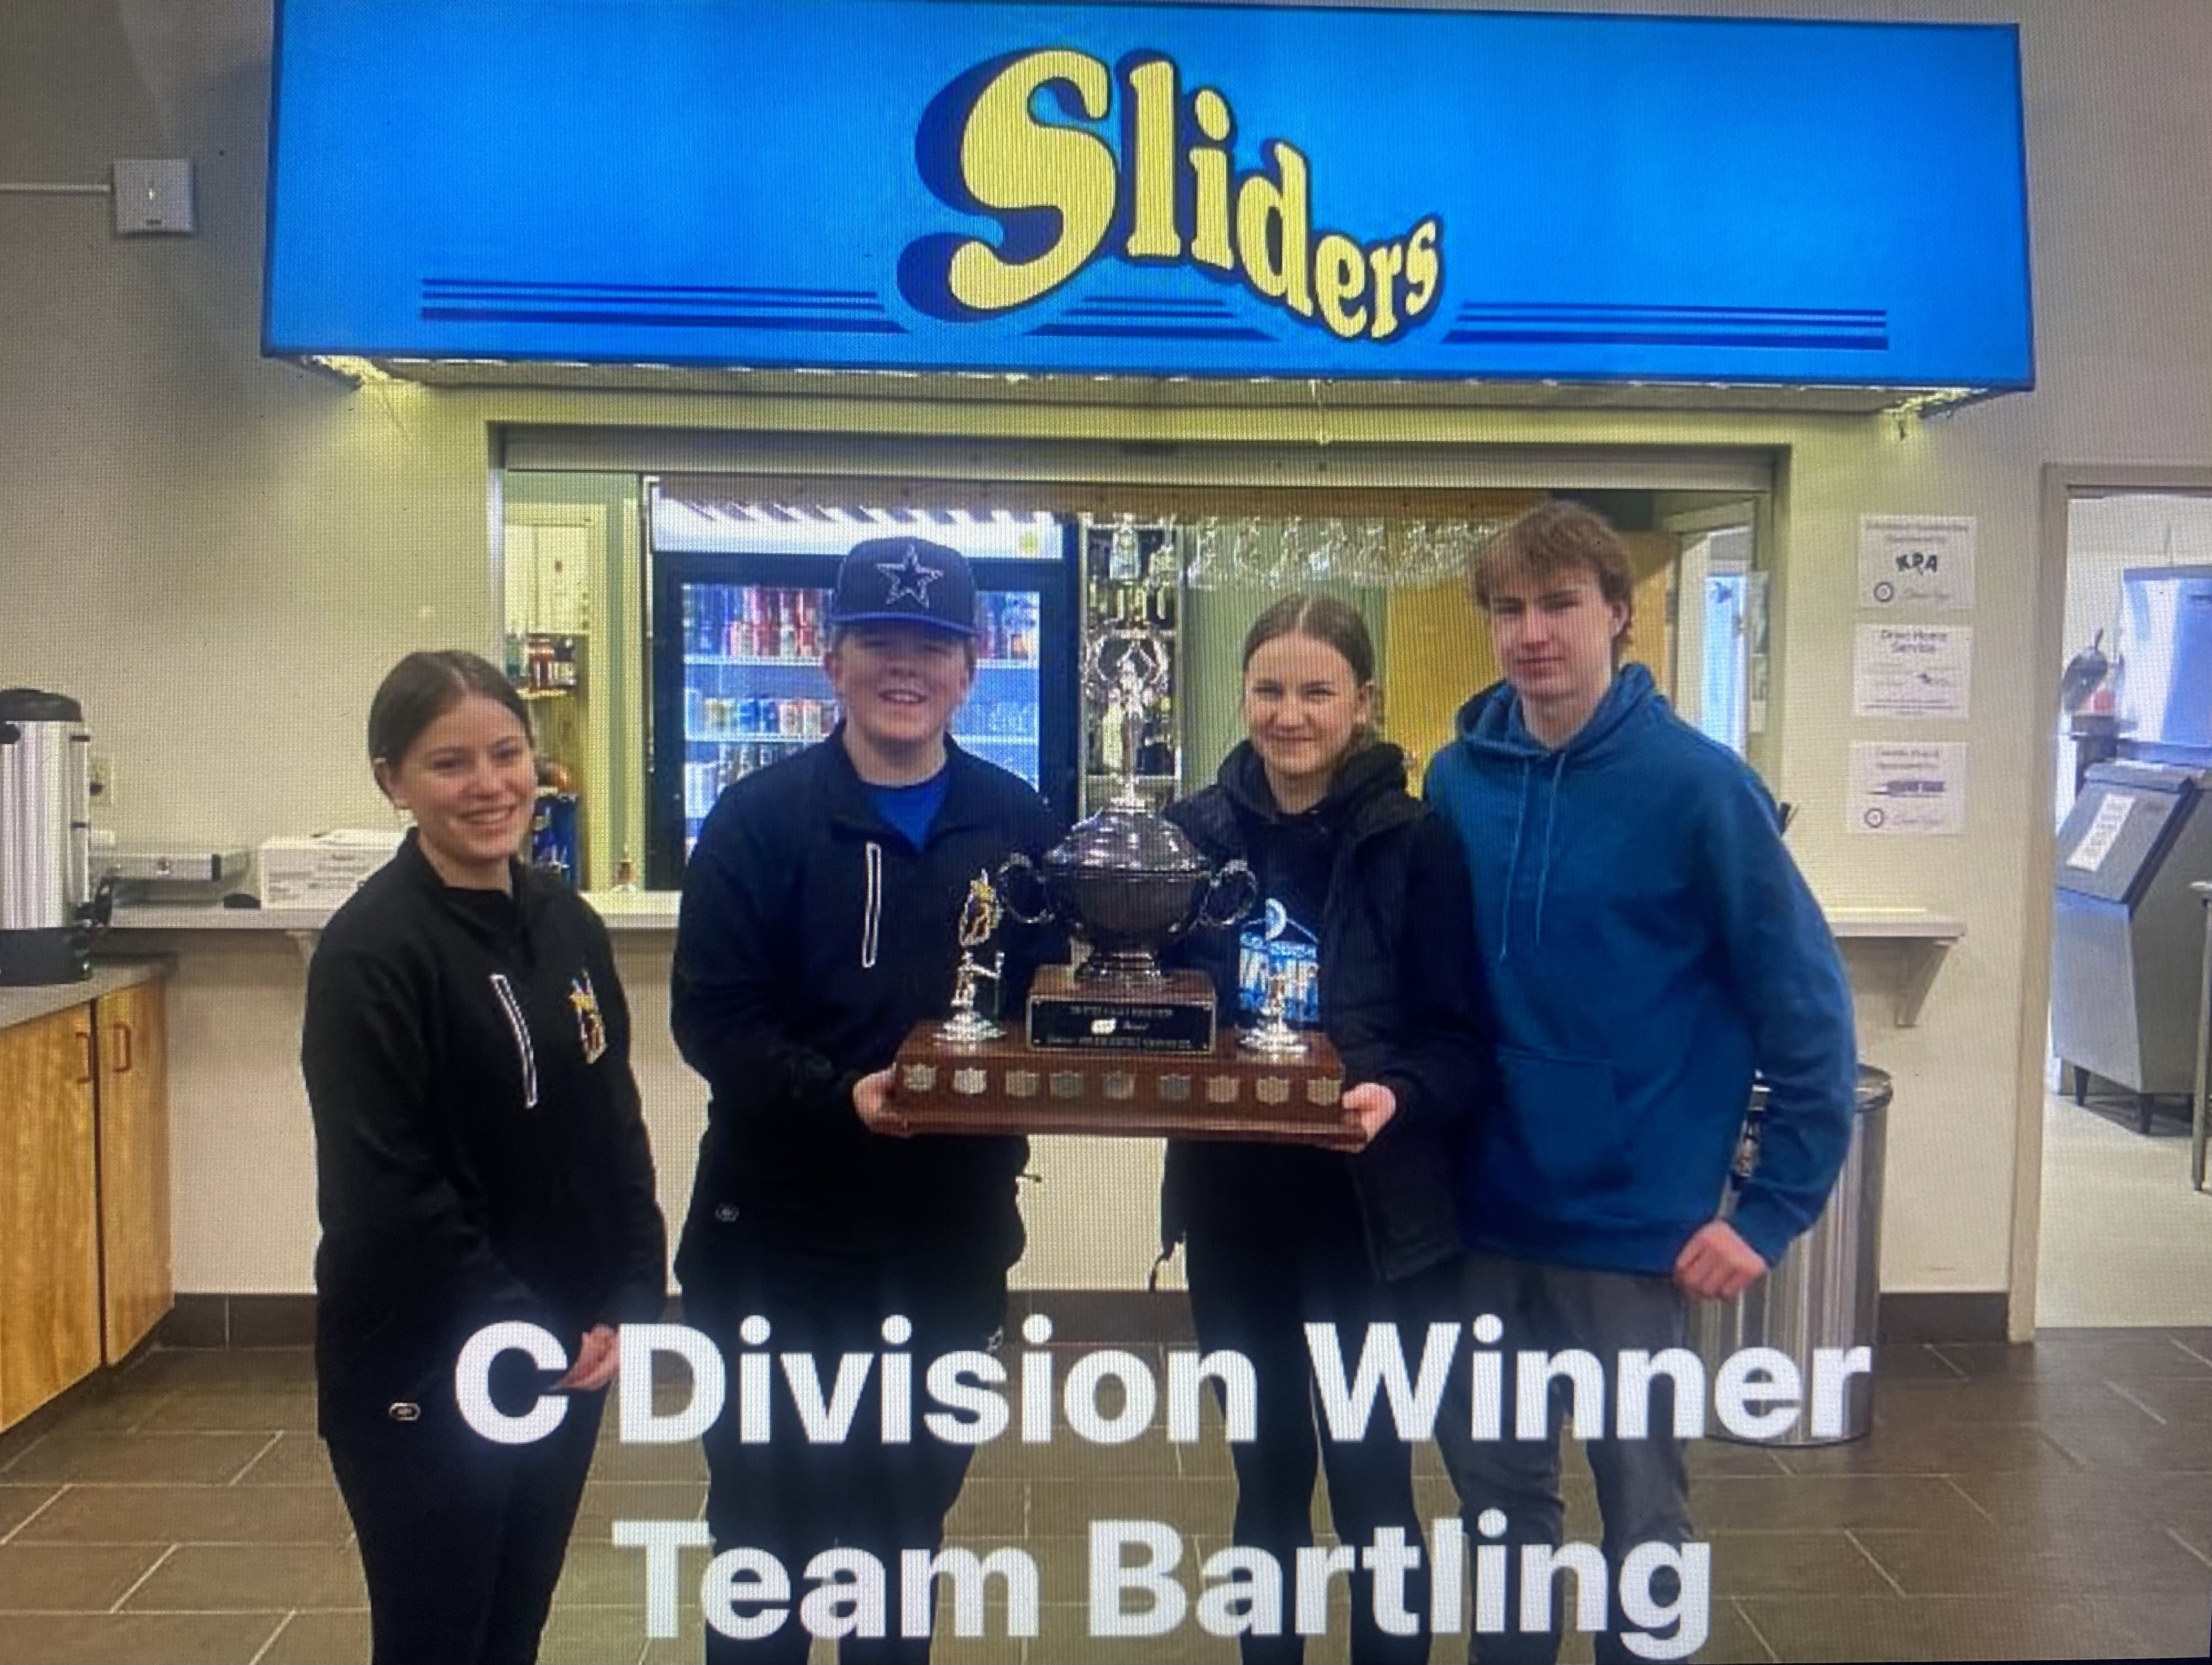 Team Bartling standing together holding their division trophy